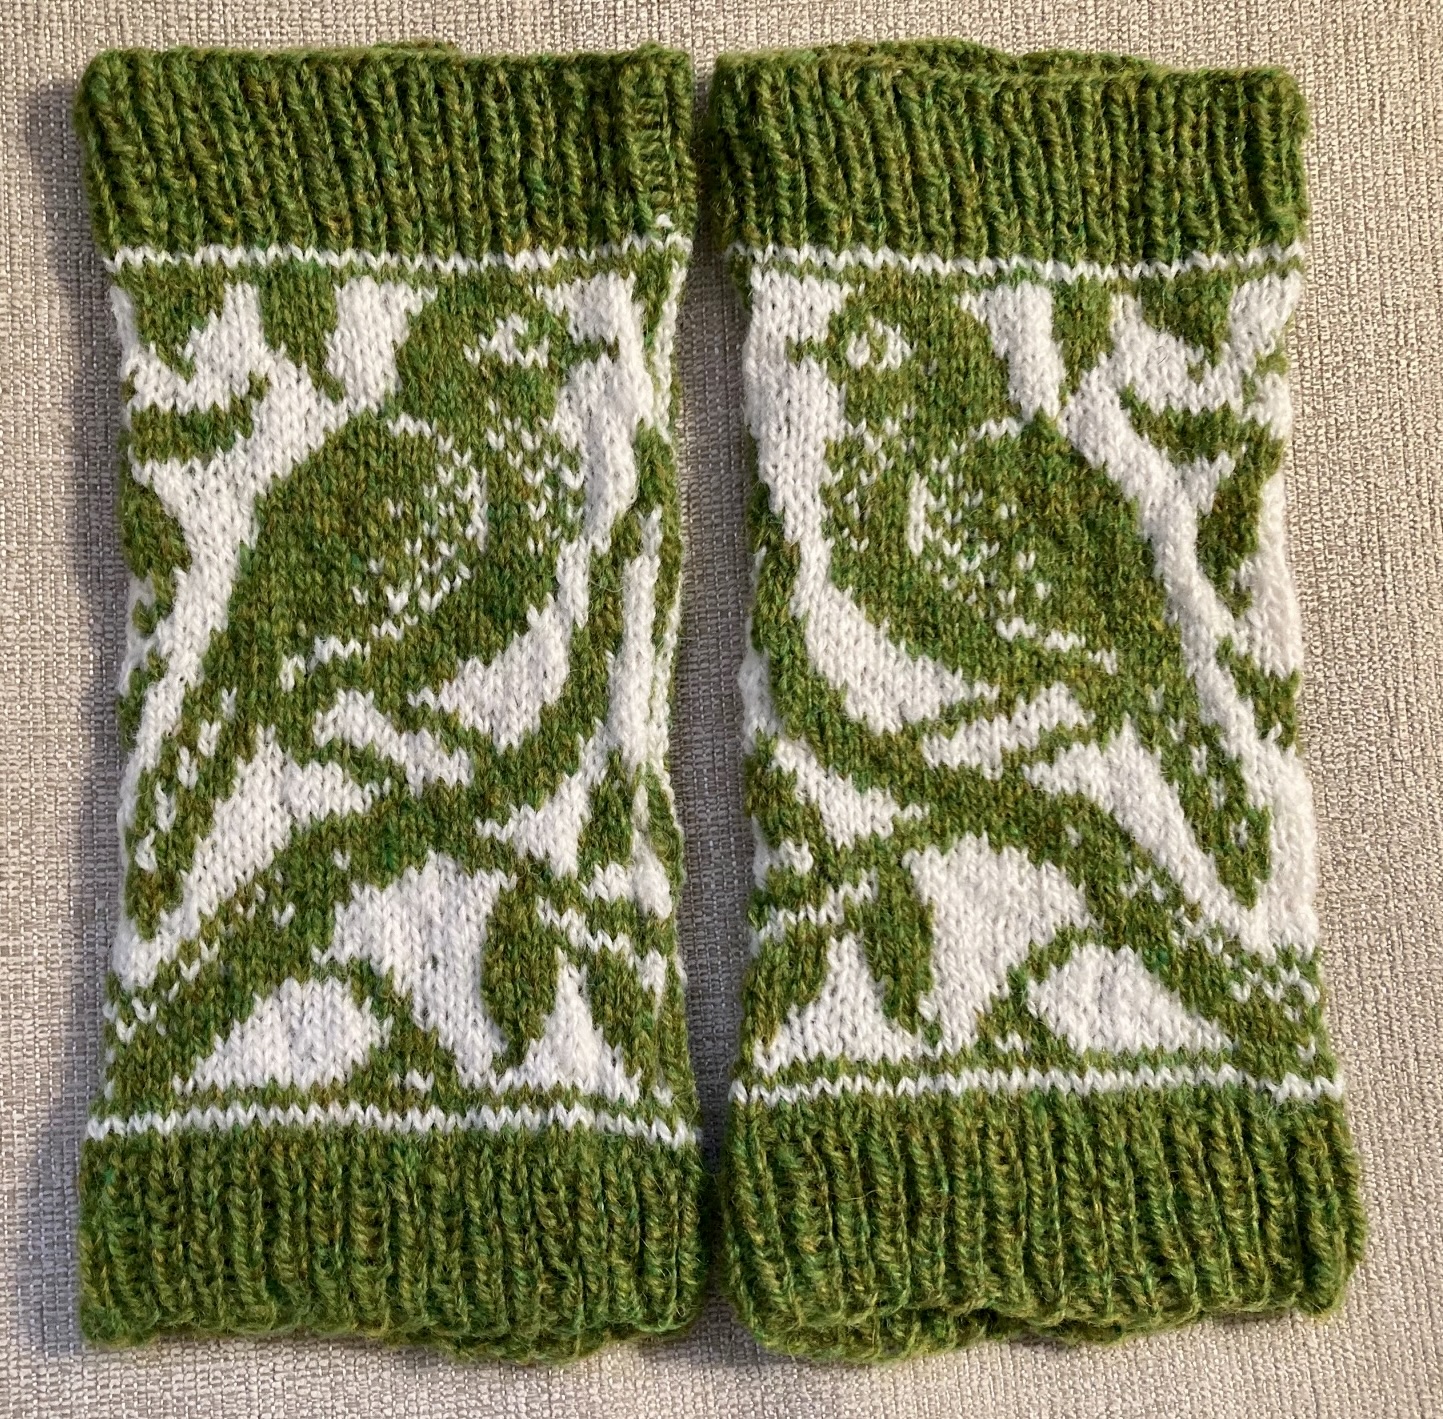 Adapting a mitten design to knit wristwarmers